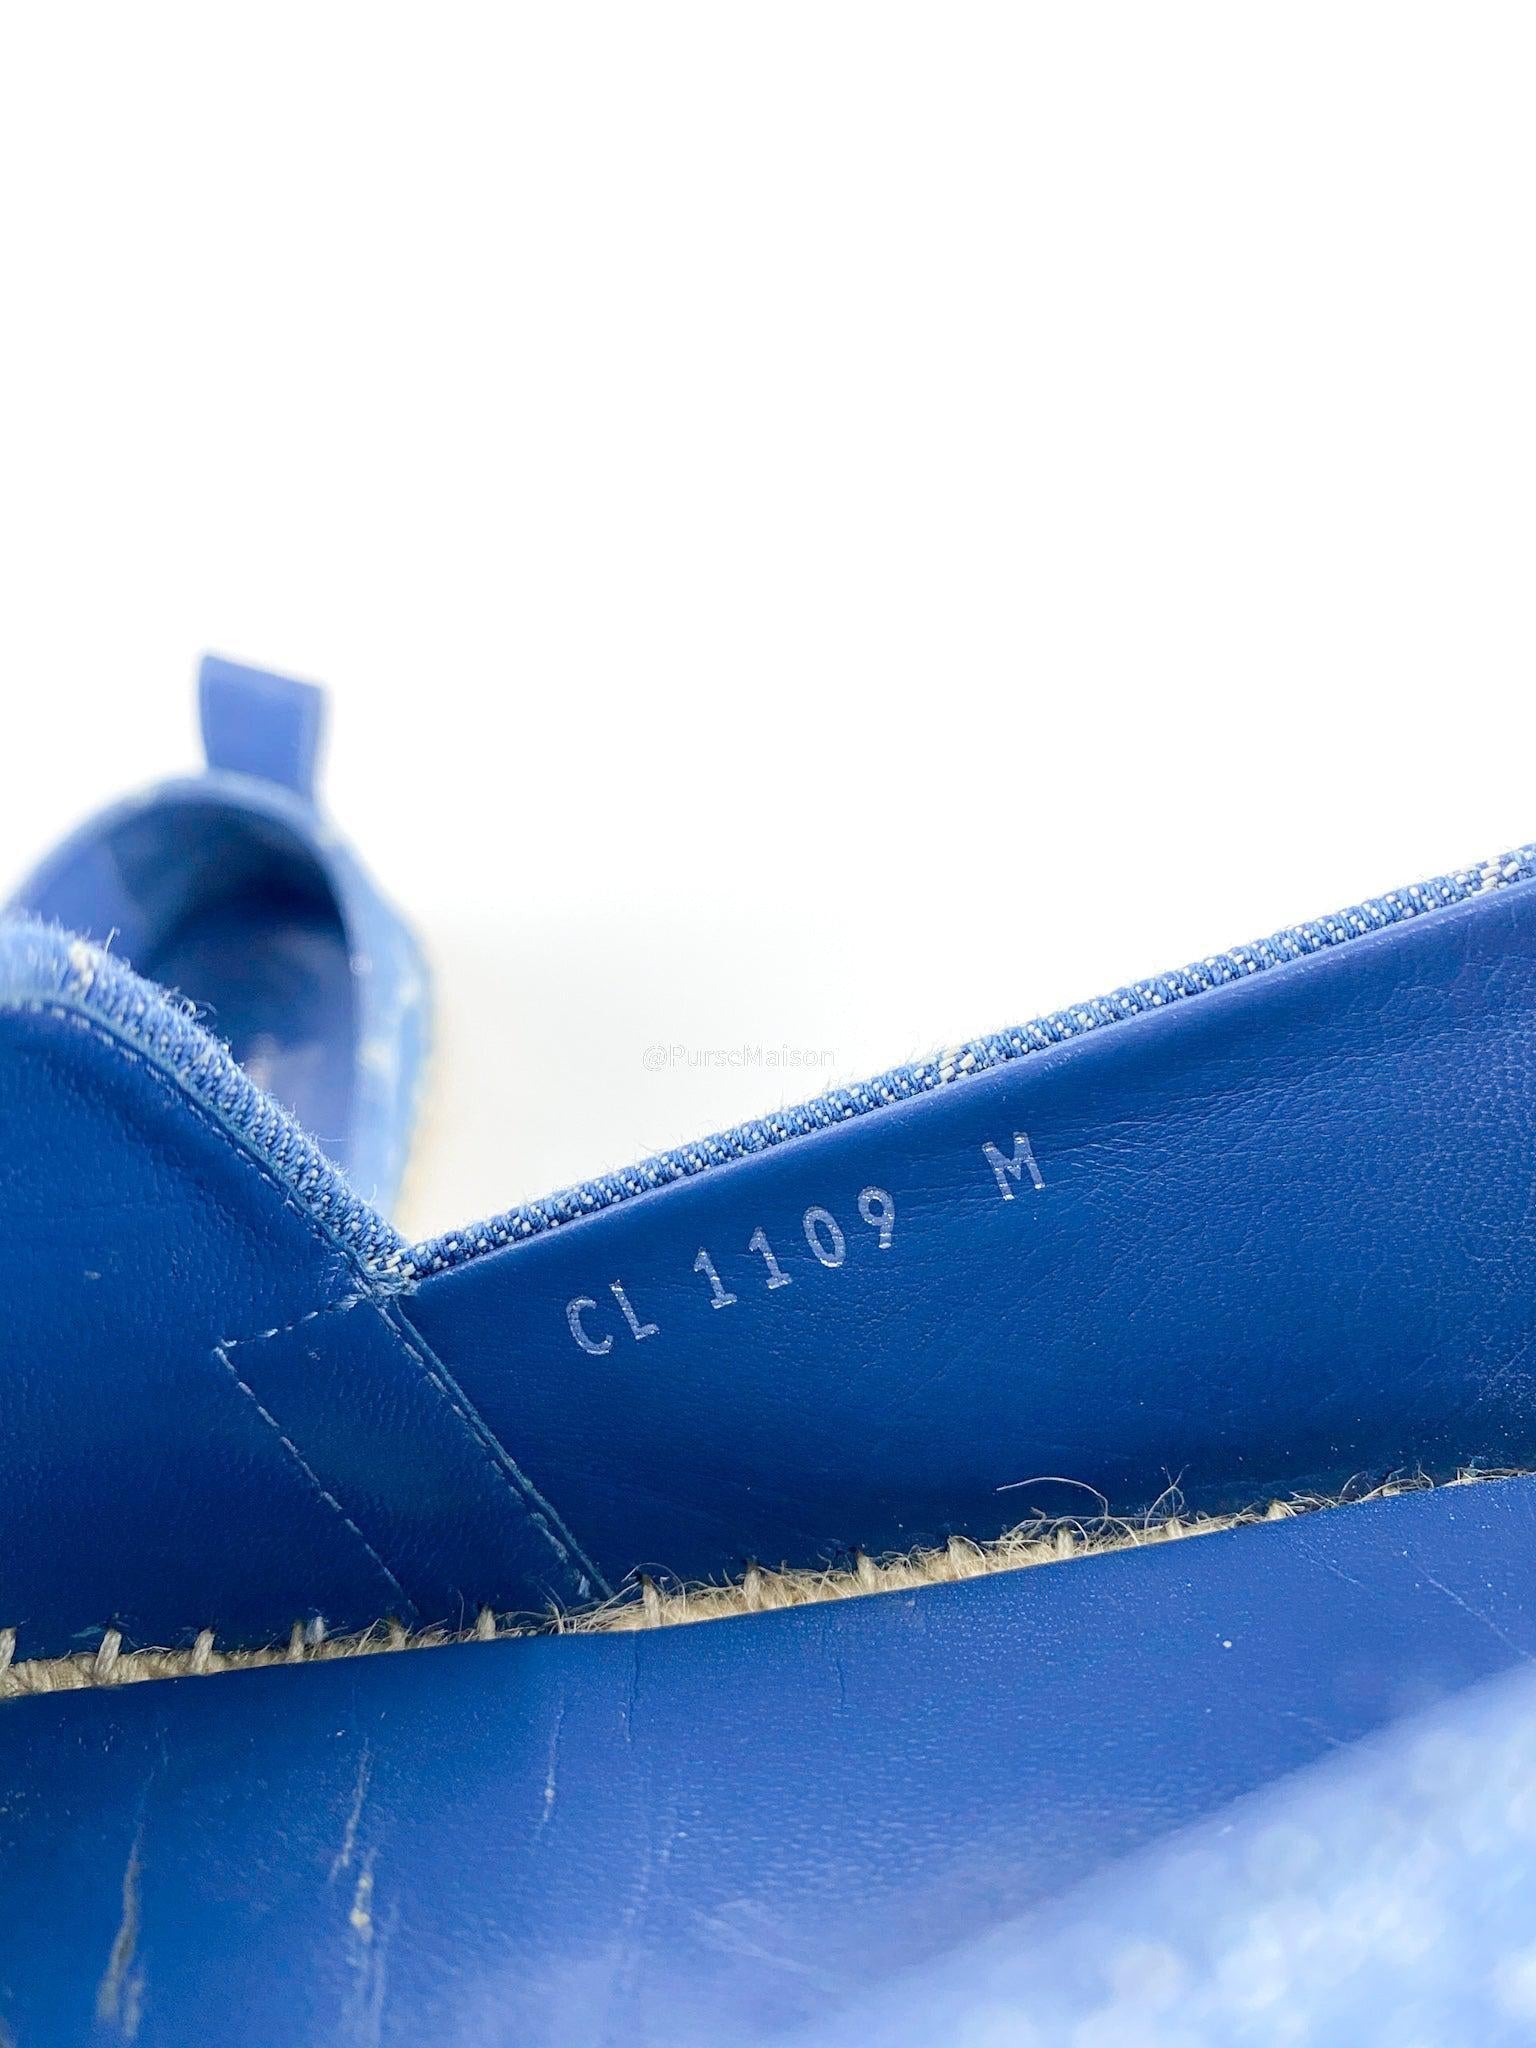 Louis Vuitton Starboard Denim Espadrille Slip On Shoes Size 36.5EU (24cm)